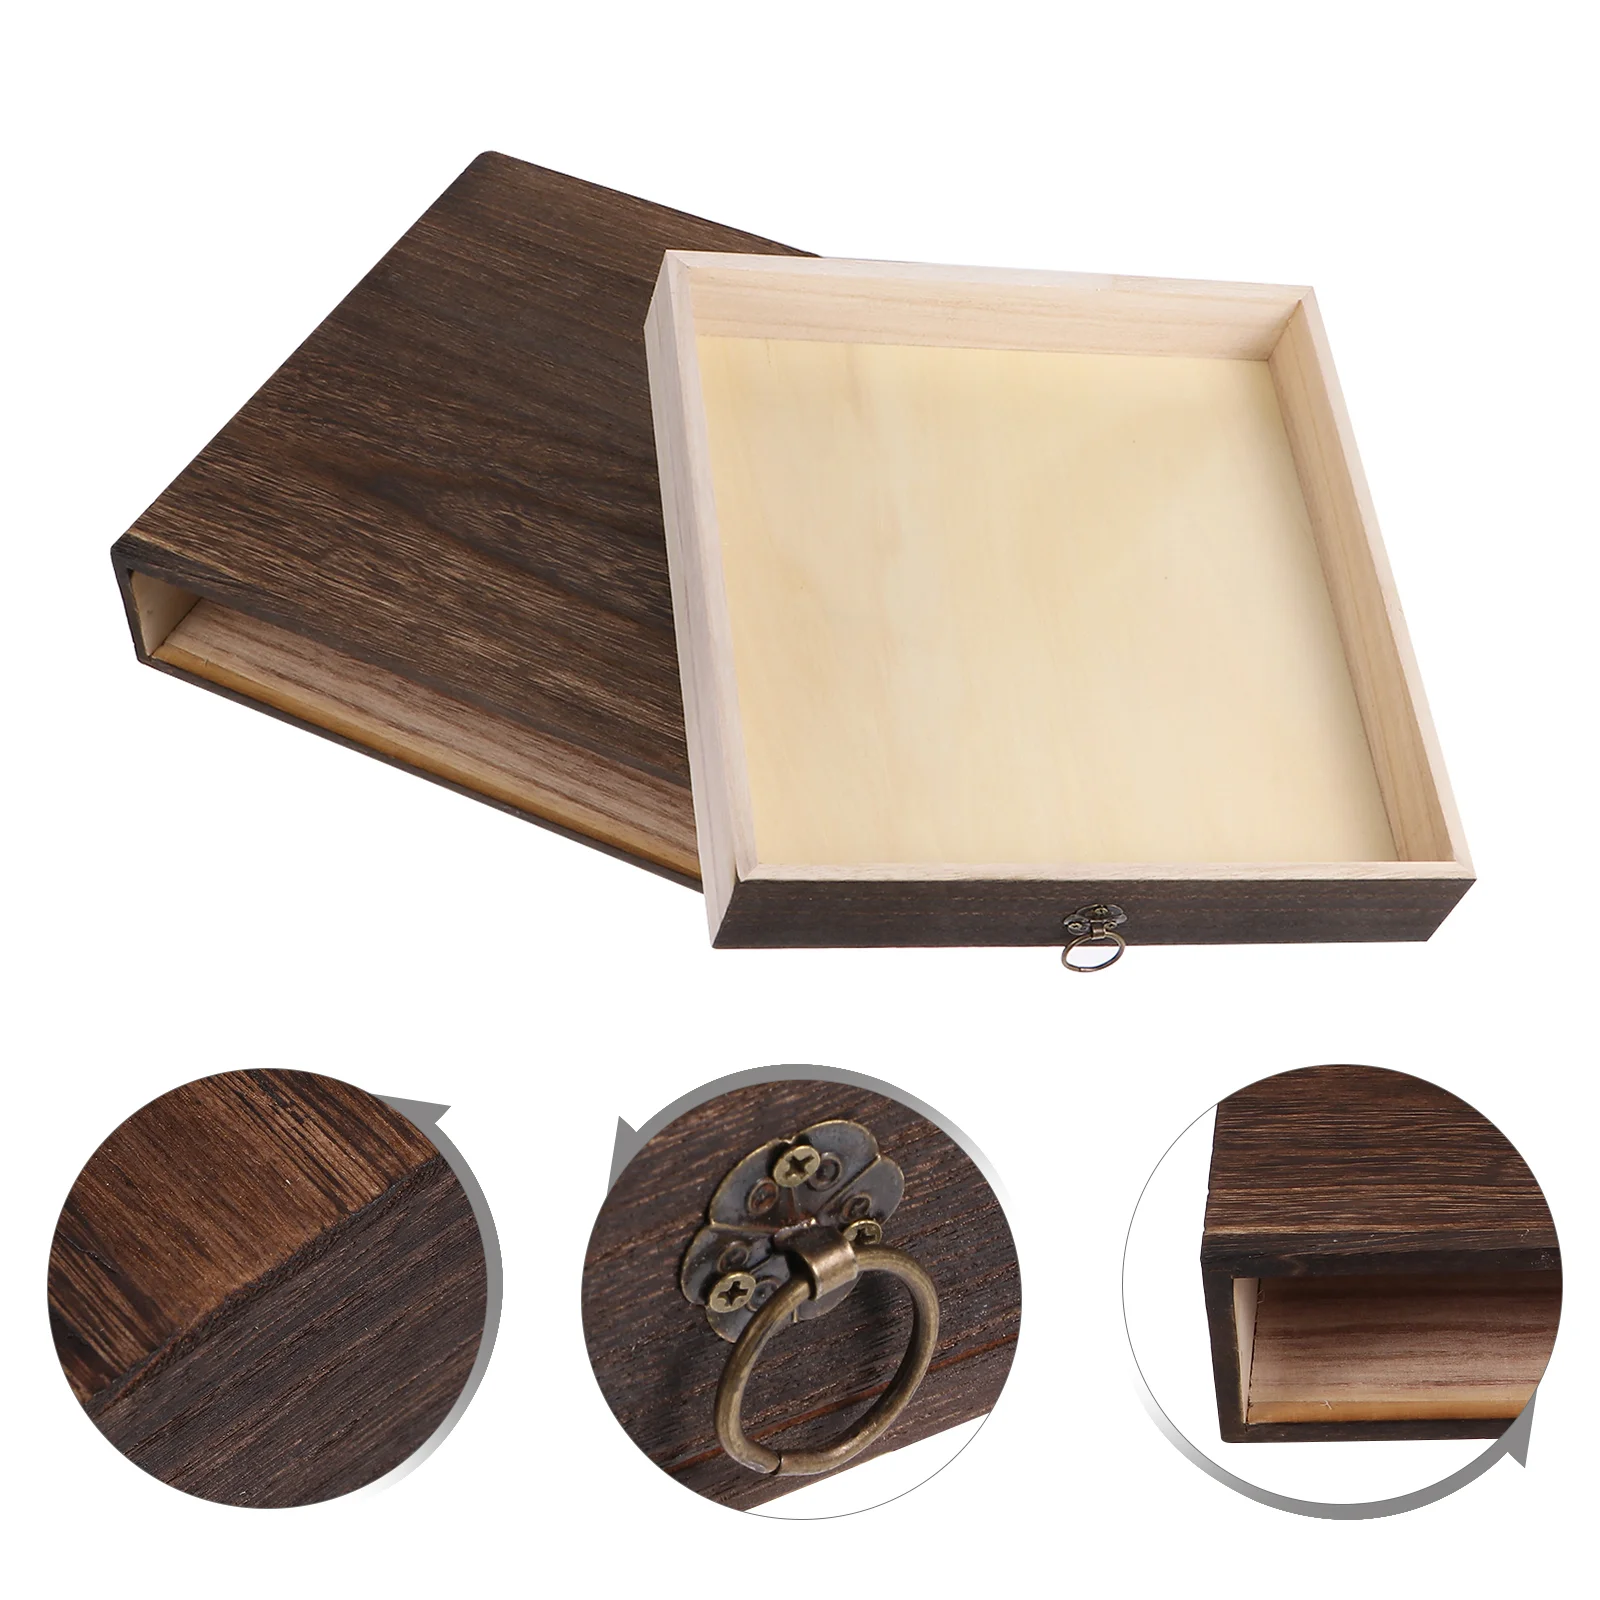 Decorative Wood Boxes Desktop Storage Tray Mini Desk Desk File Organizer Desktop Wood Storage Box Rustic Wood Shelves